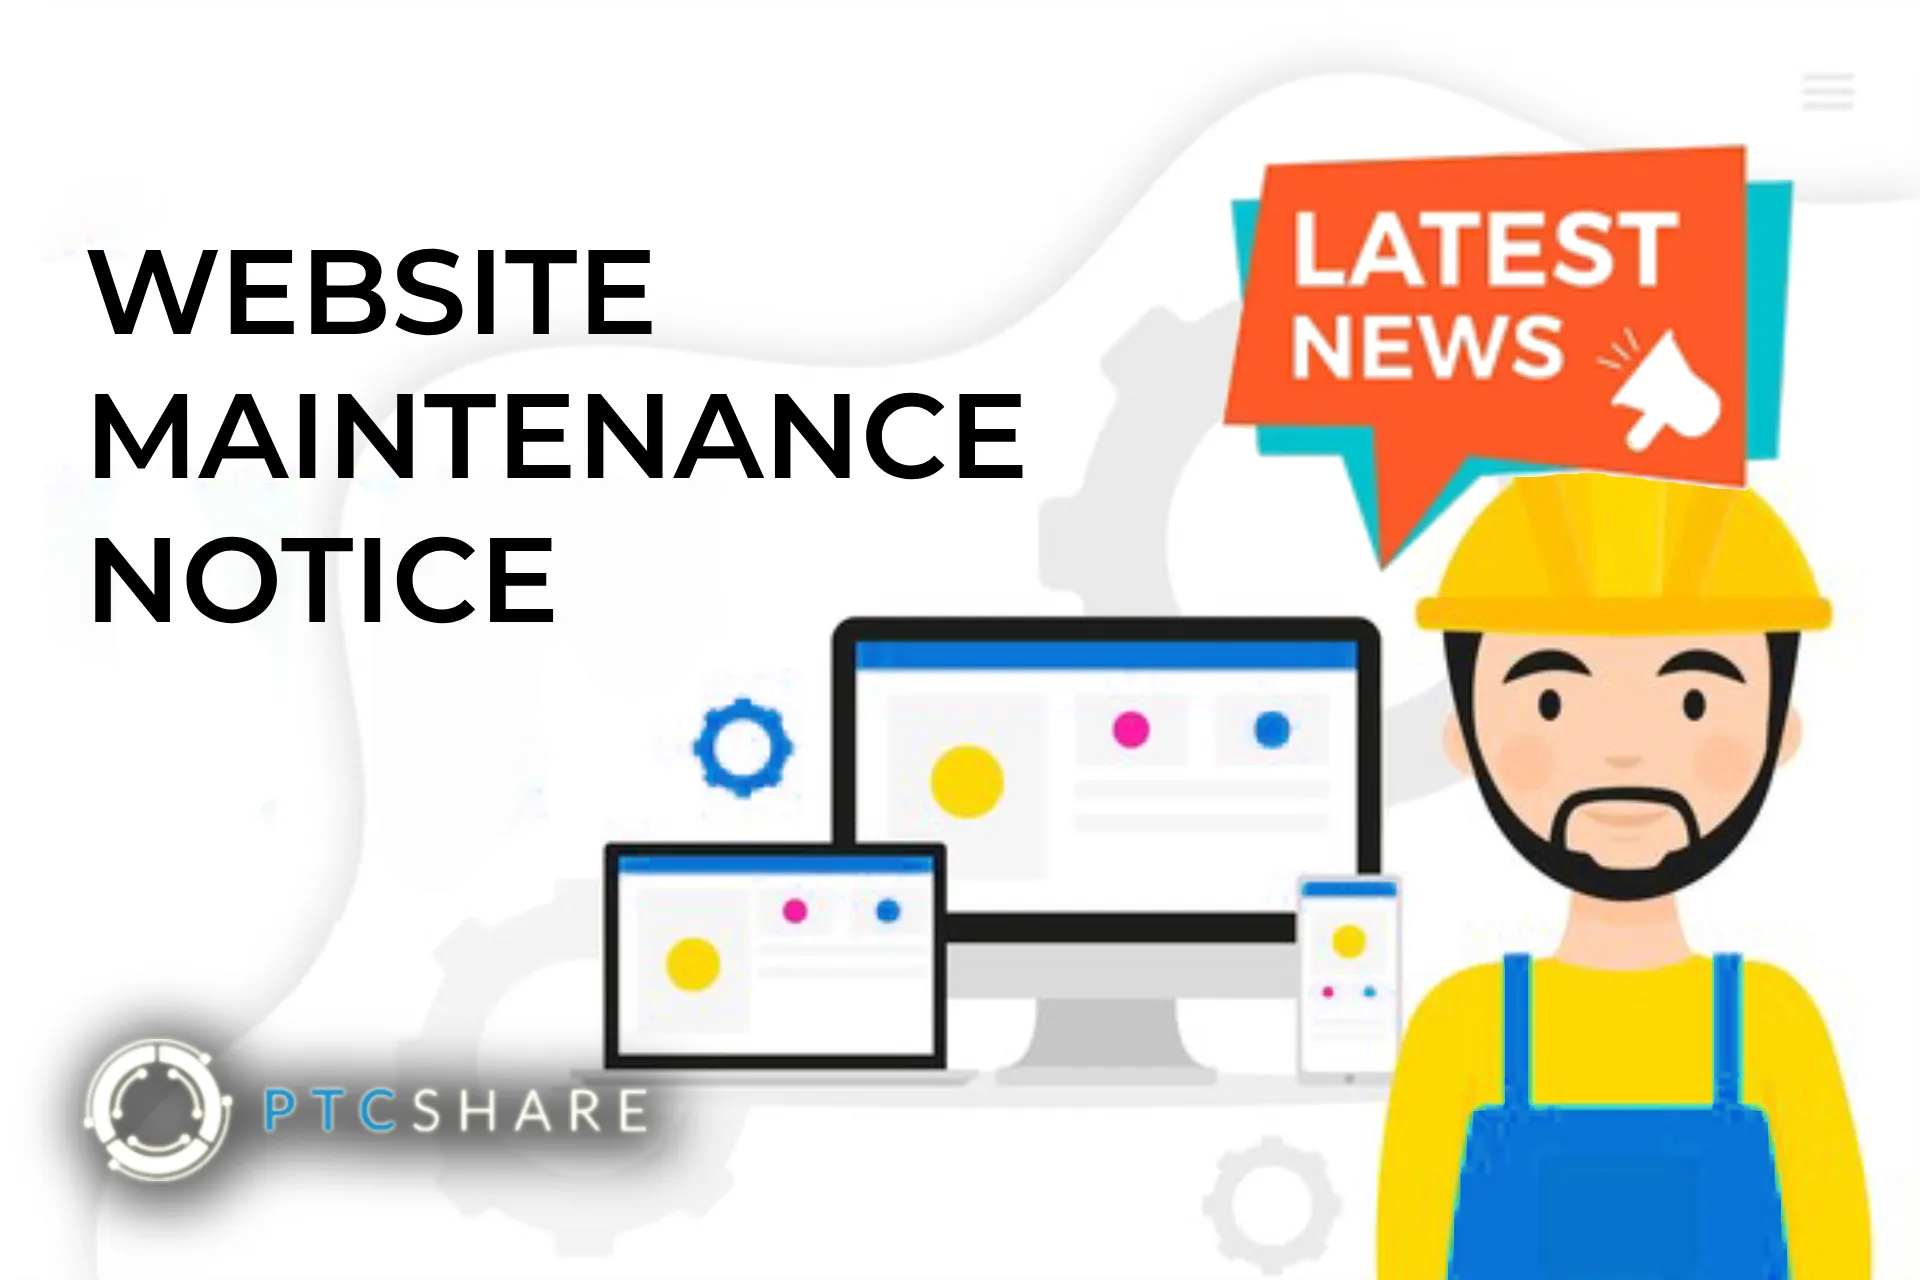 Latest News on PTCShare’s Aug 22 Server Maintenance